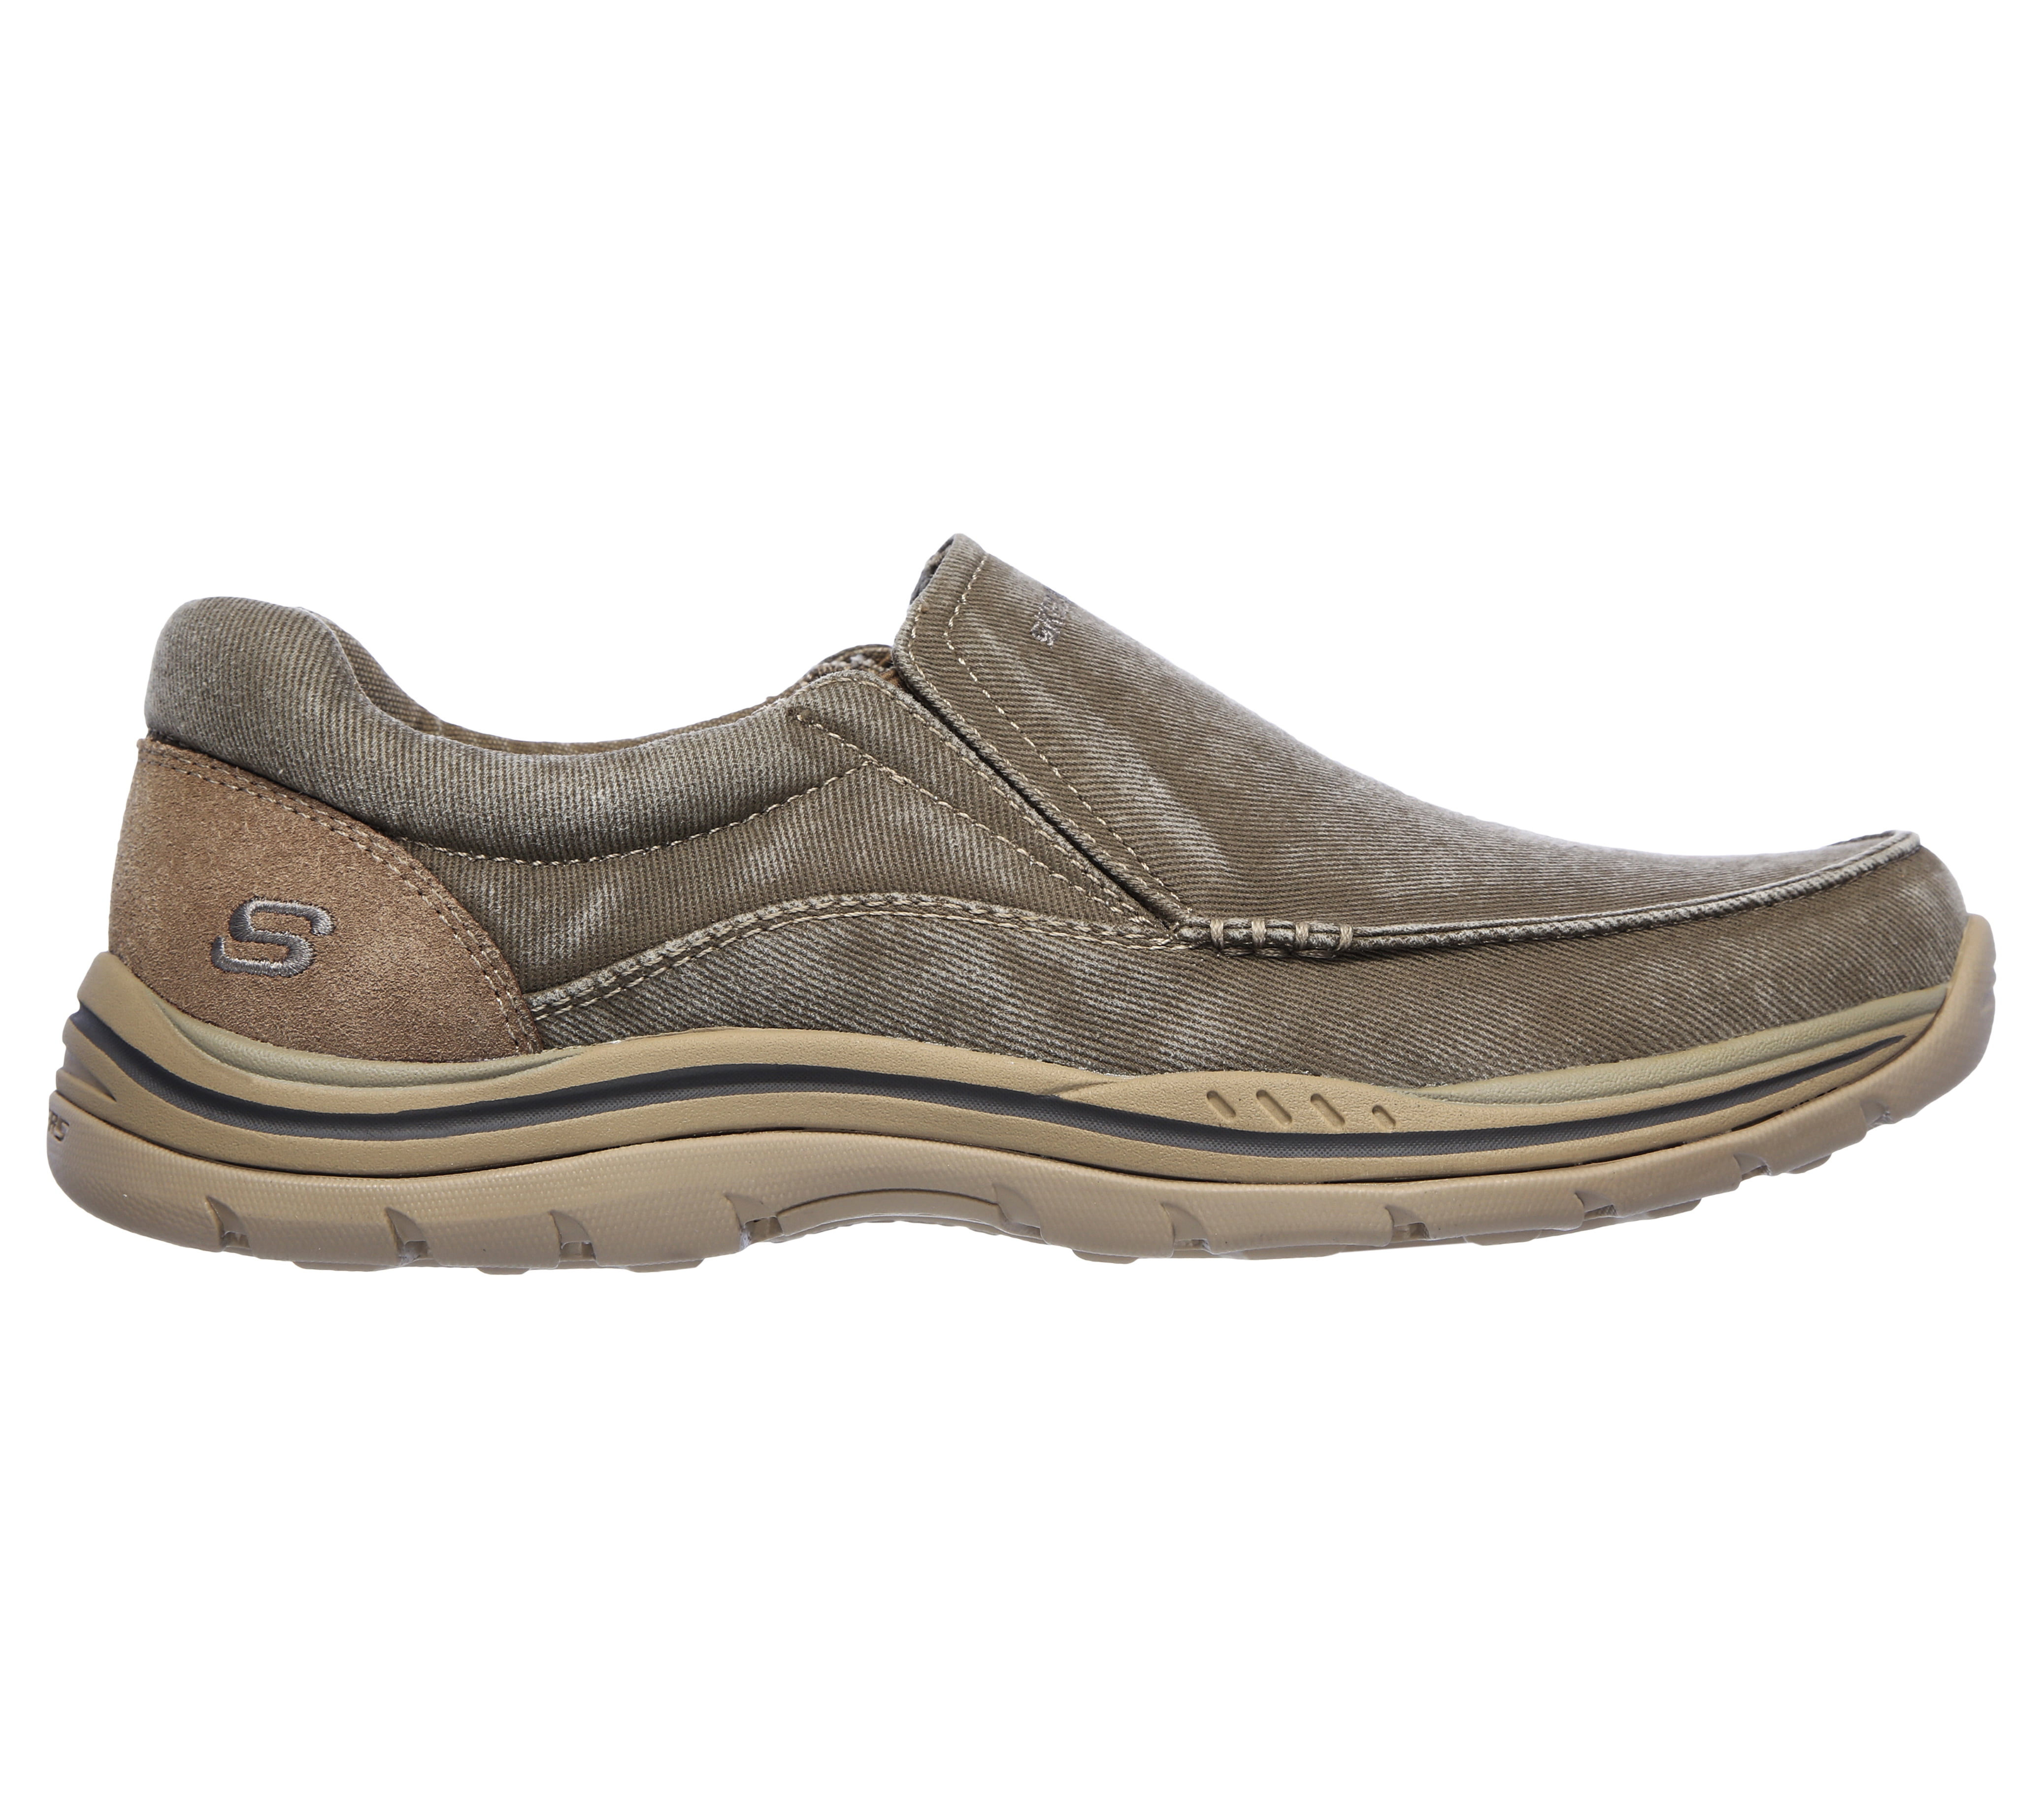 Skechers Expected Avillo Moccasins Mens Size 8.5 Khaki Slip On Shoes SN64109 GUC